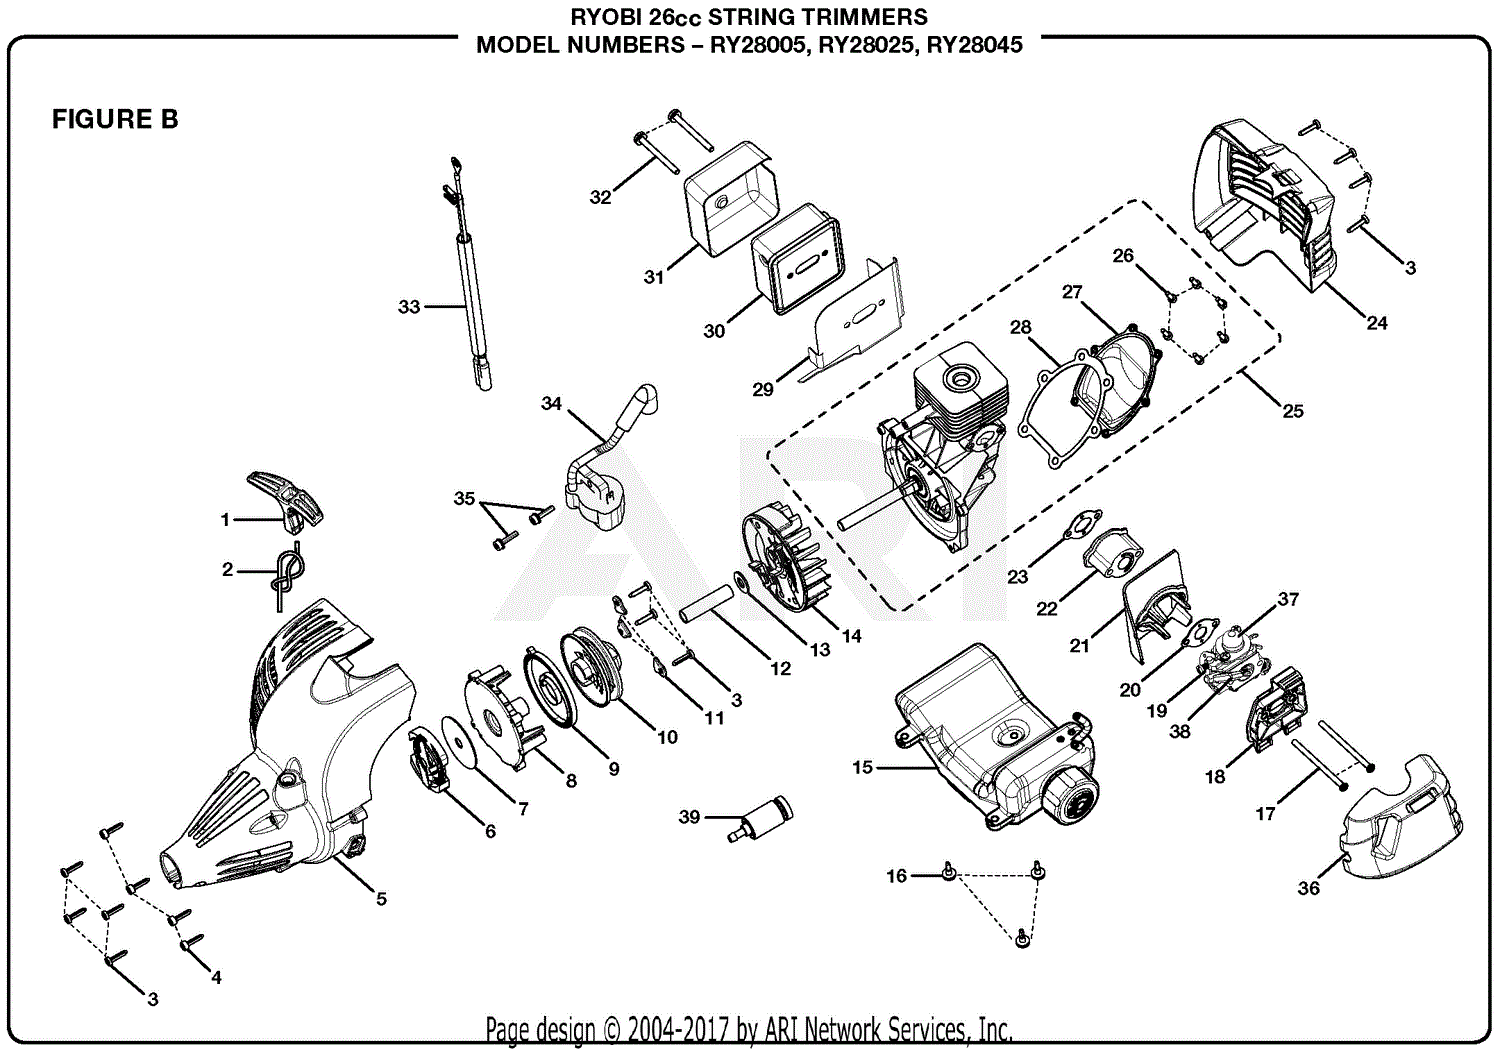 40 Ryobi Carburetor Parts Diagram Diagram Resource